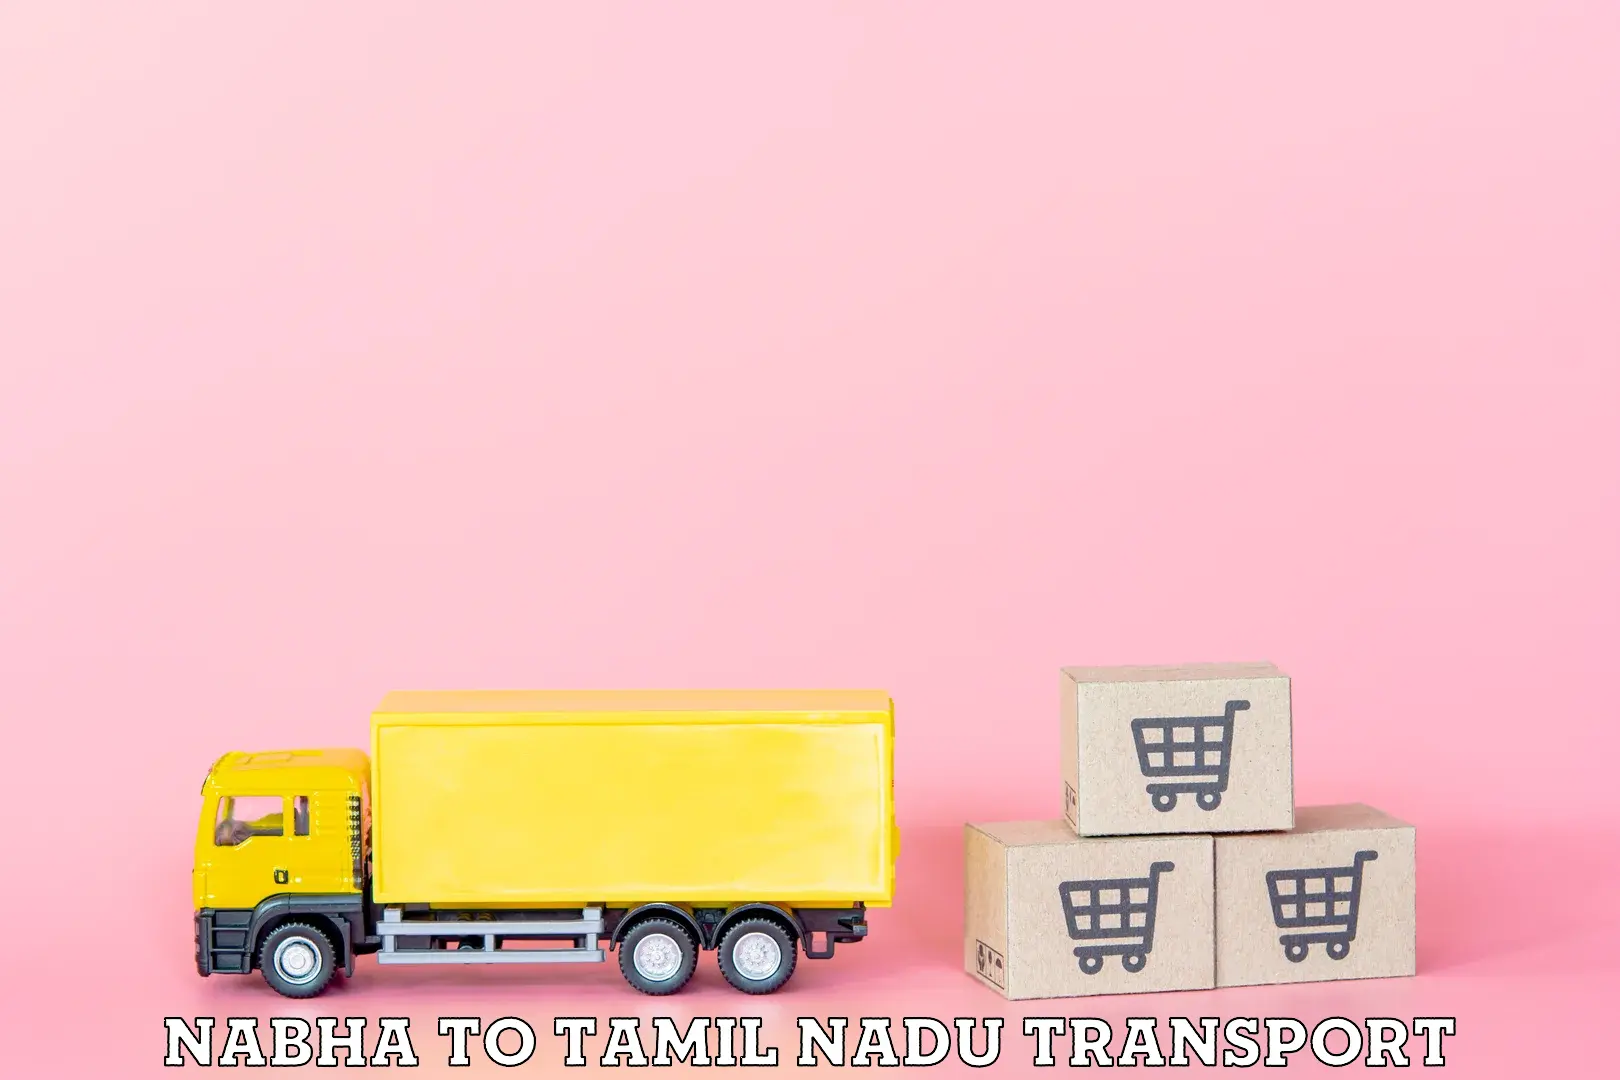 Container transport service Nabha to Chennai